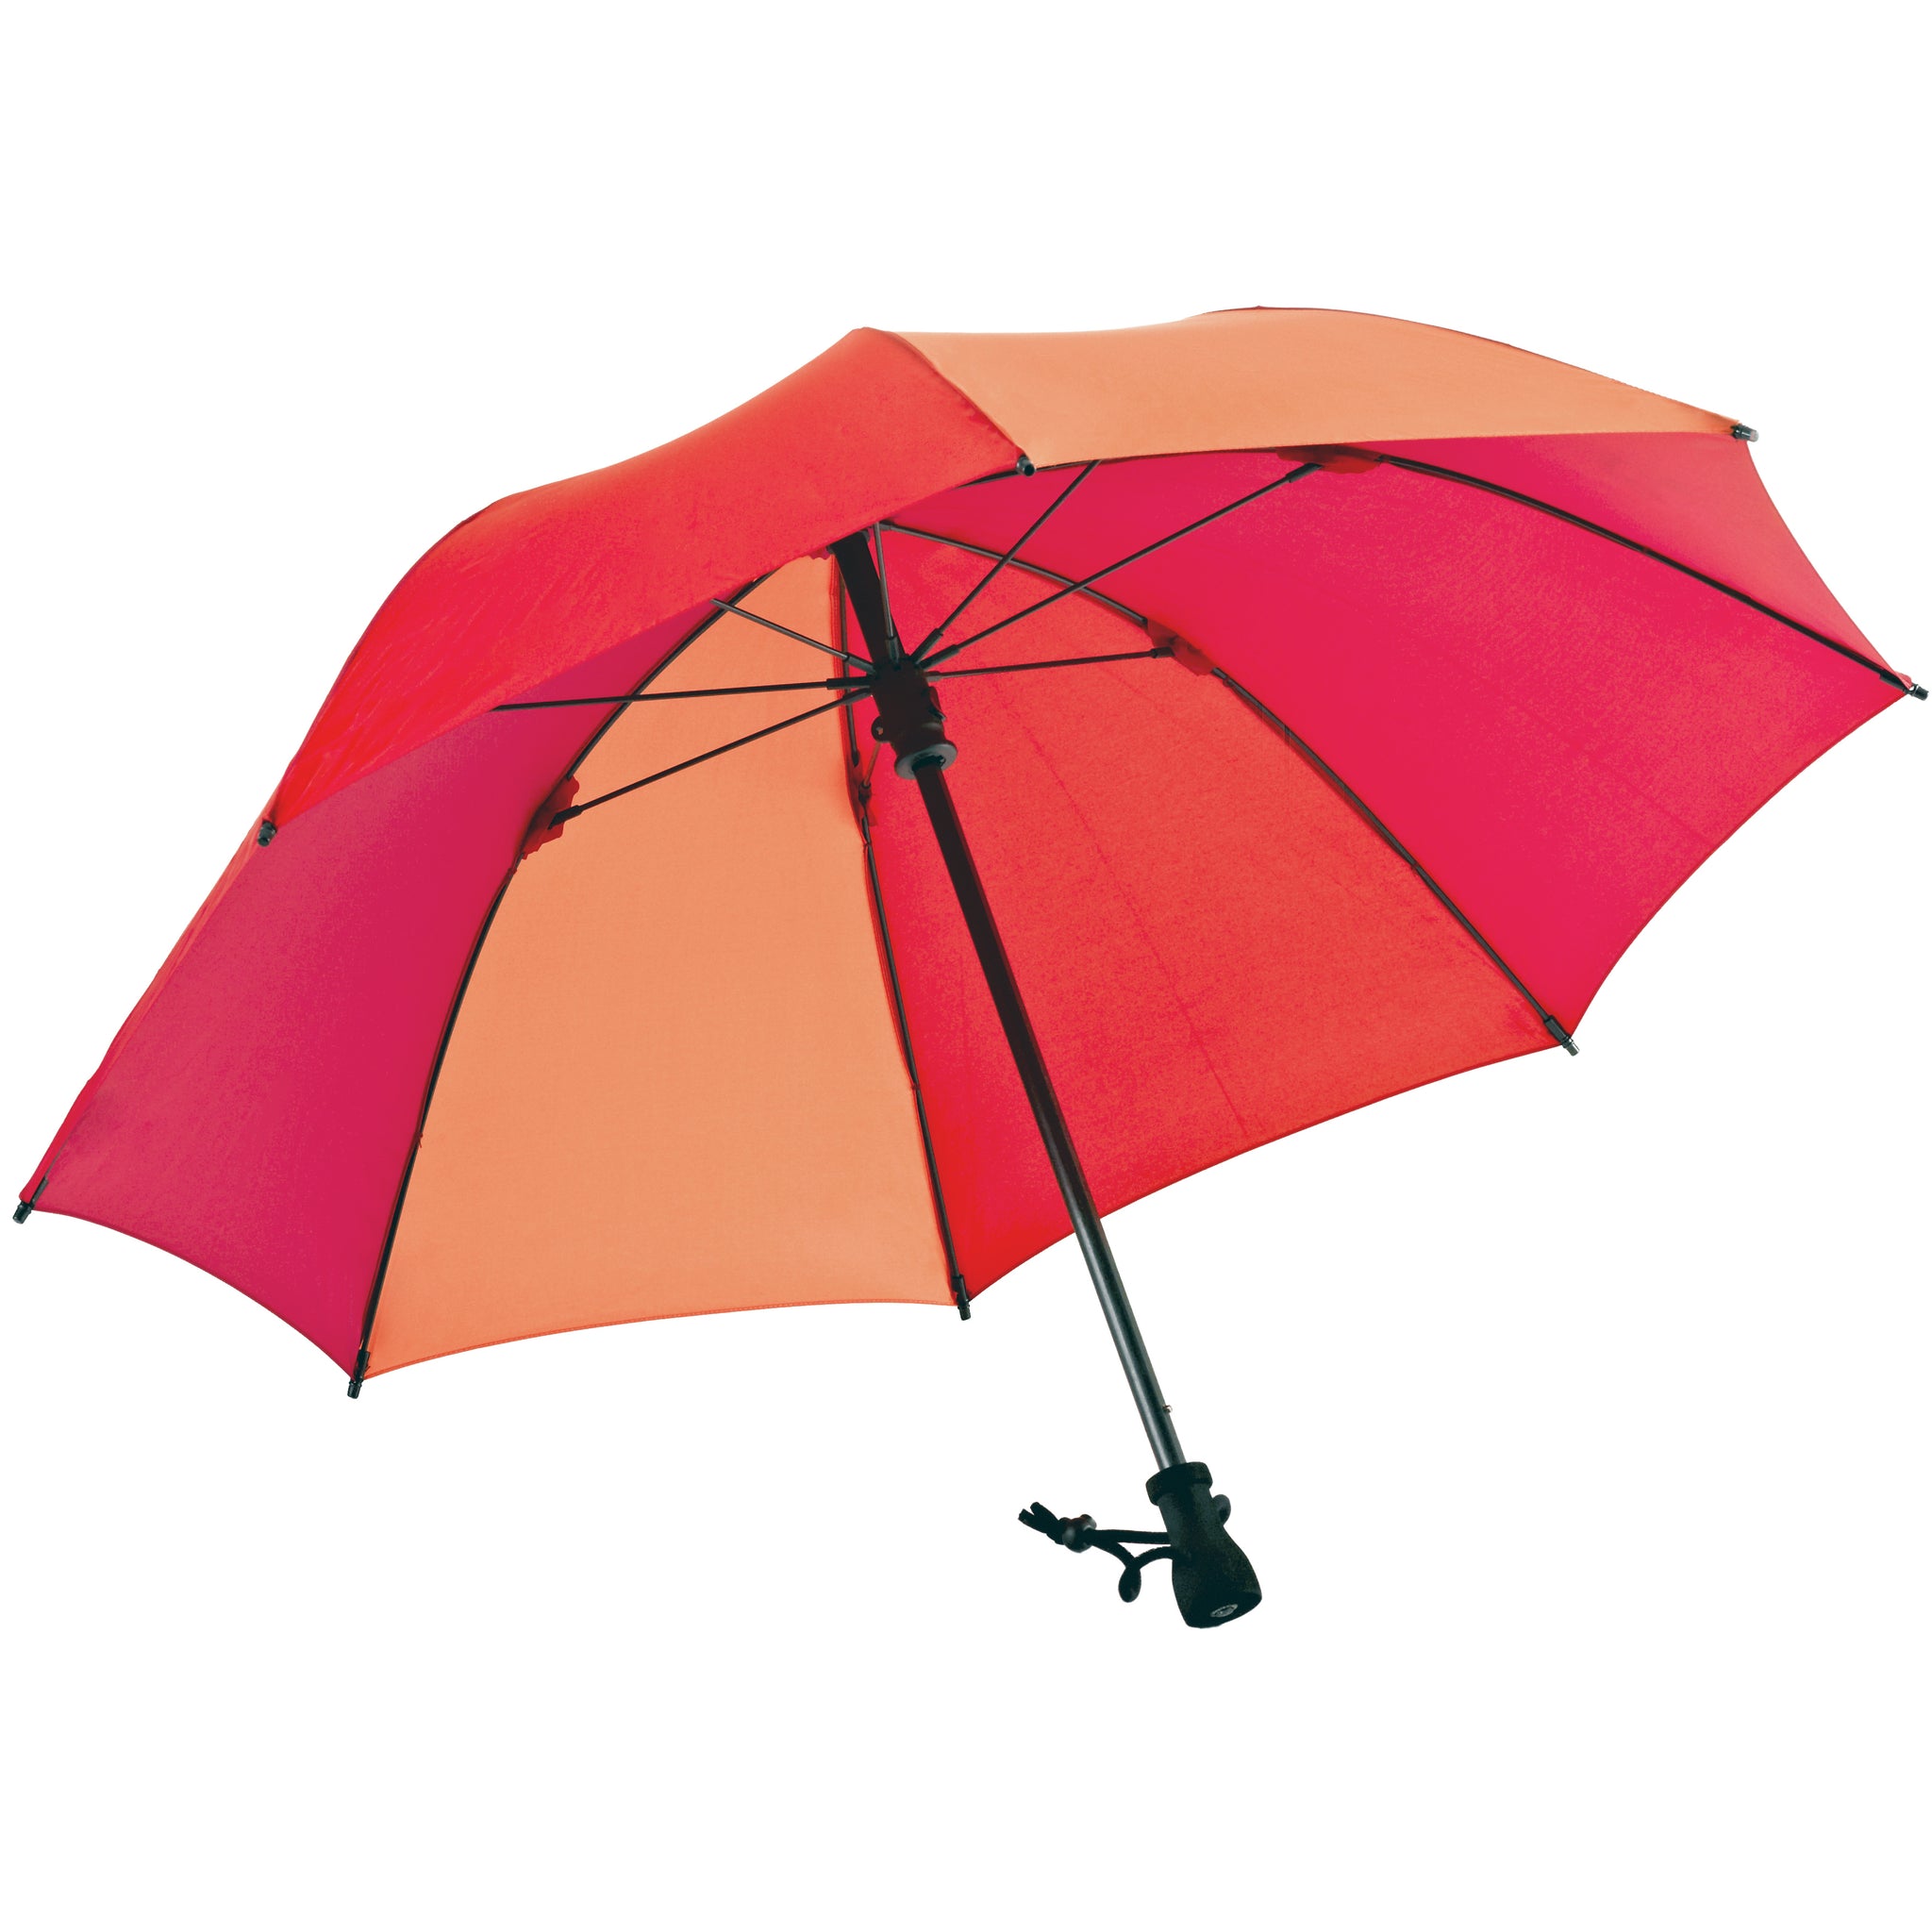 Umbrella – Outdoor USA EuroSCHIRM Birdiepal EuroSCHIRM